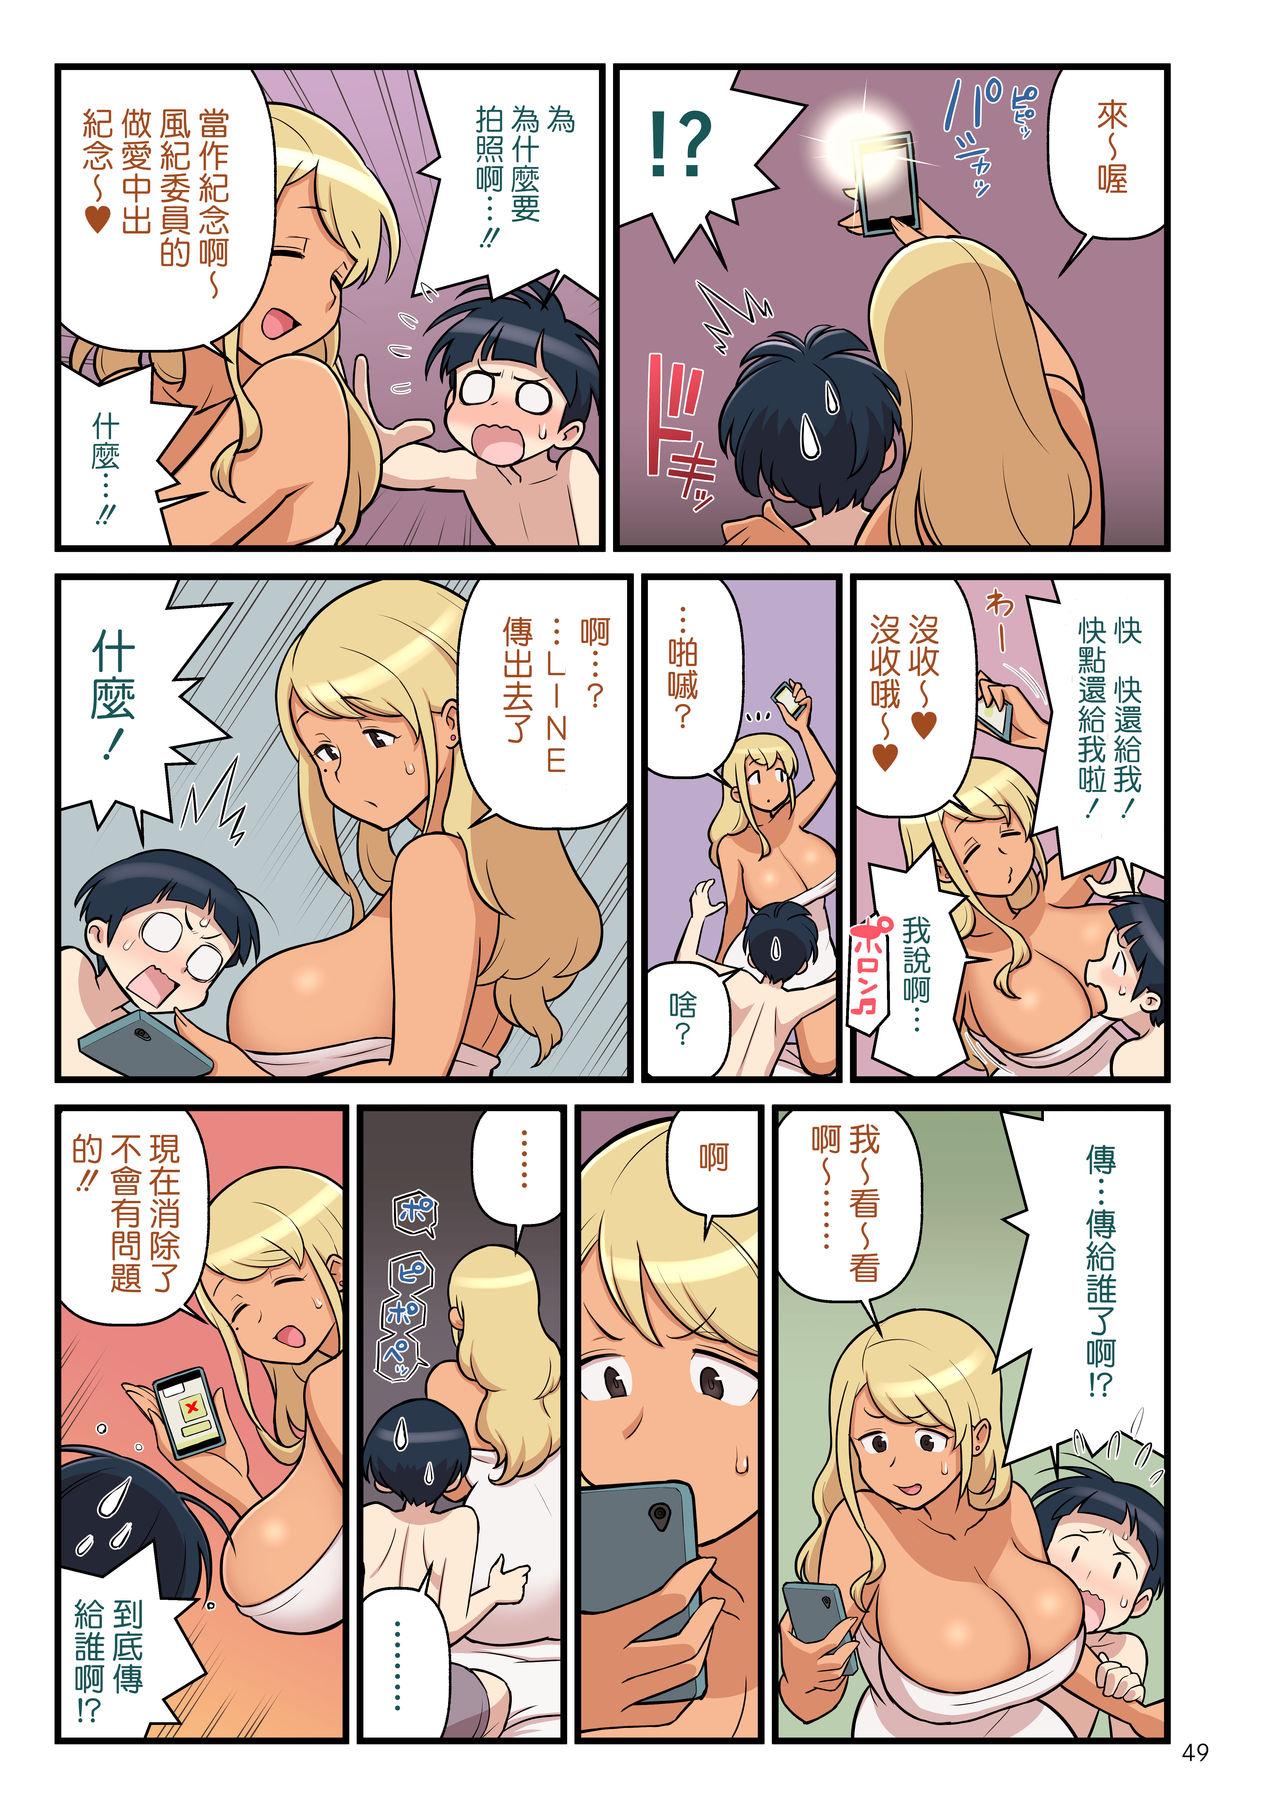 Public Nudity Kuro Gal VS Fuuki Iin - Black Gal VS Prefect 1 - Original Affair - Page 50